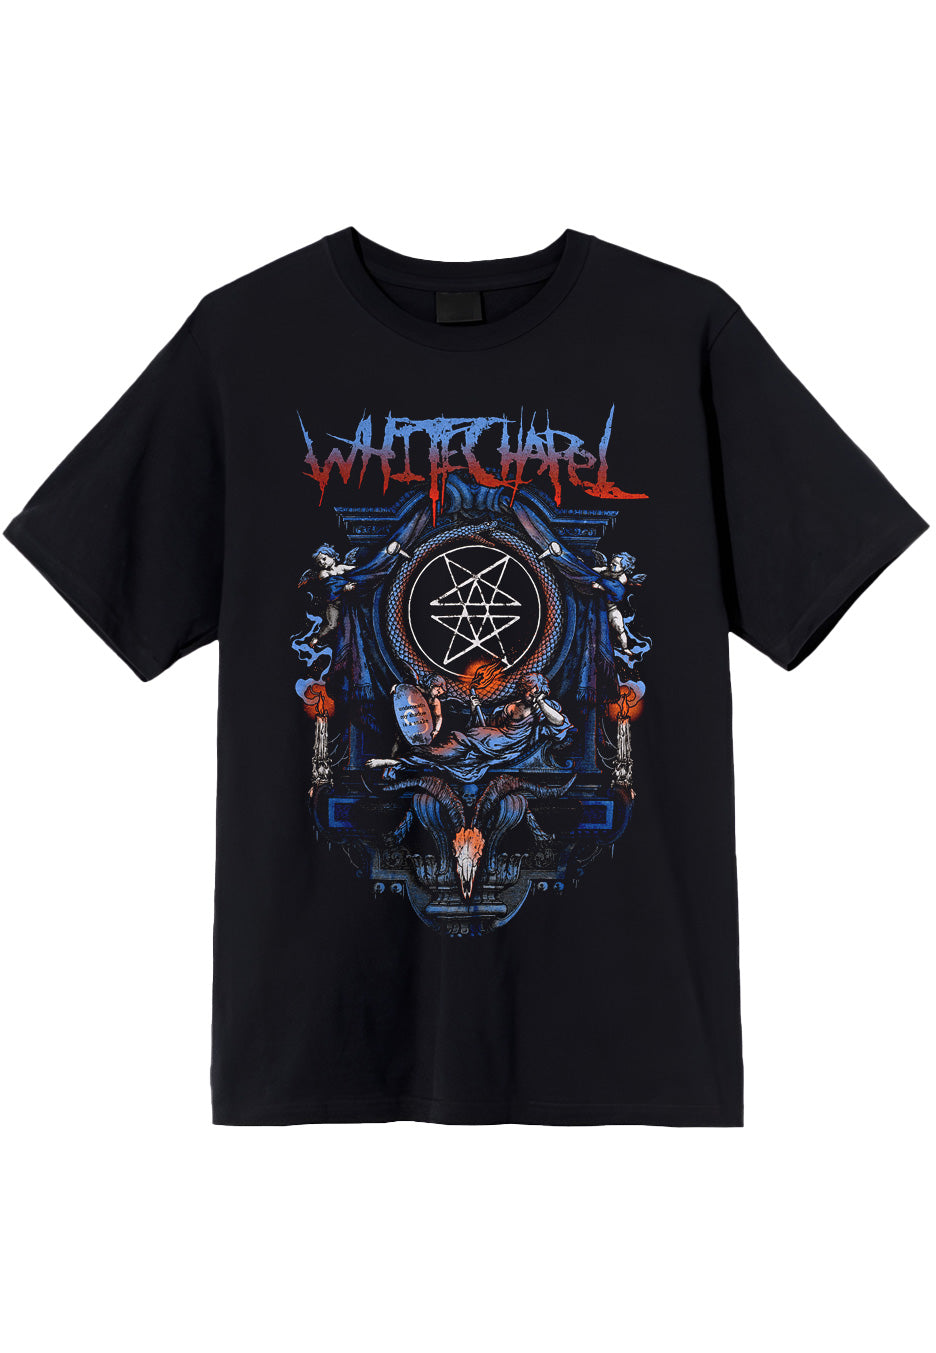 Whitechapel - Serpentine Tour 2023 - T-Shirt